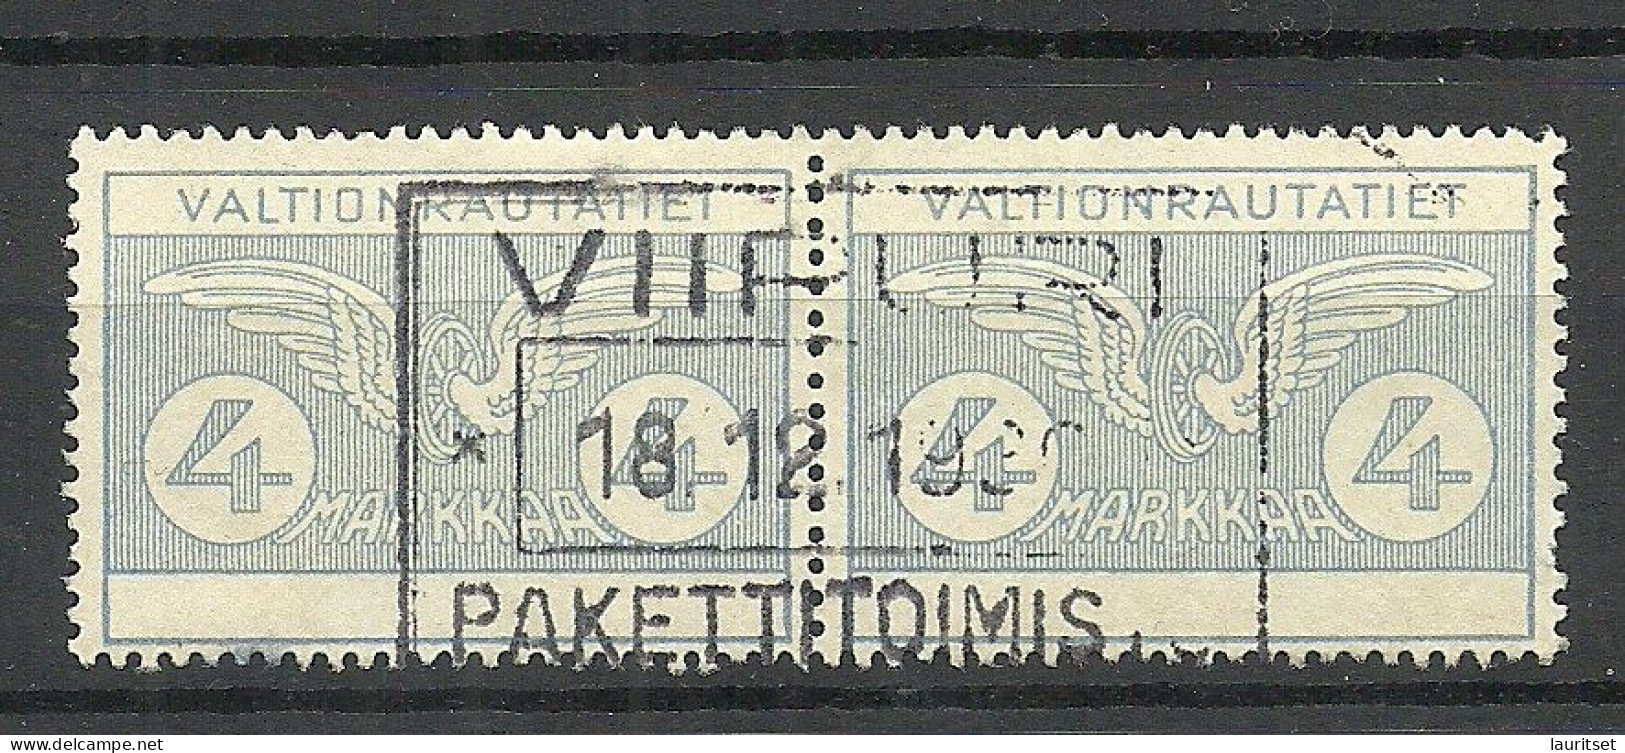 FINLAND FINNLAND 1930ies O Viipuri Railway Stamp 4 MK As Pair - Parcel Post